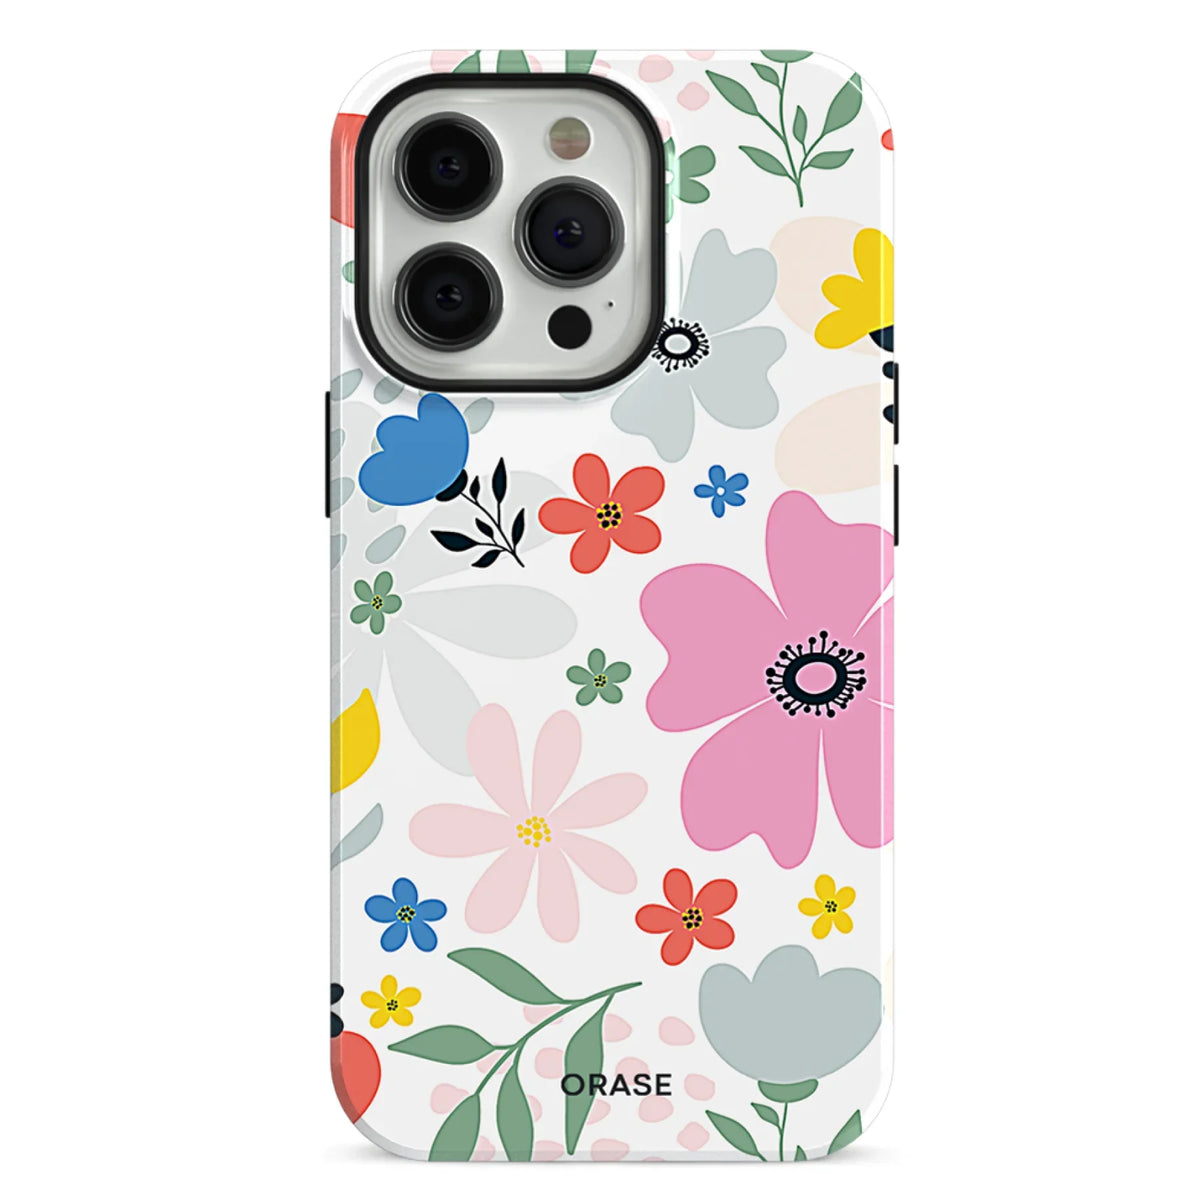 Flower Power iPhone Case - iPhone 12 Mini Cases